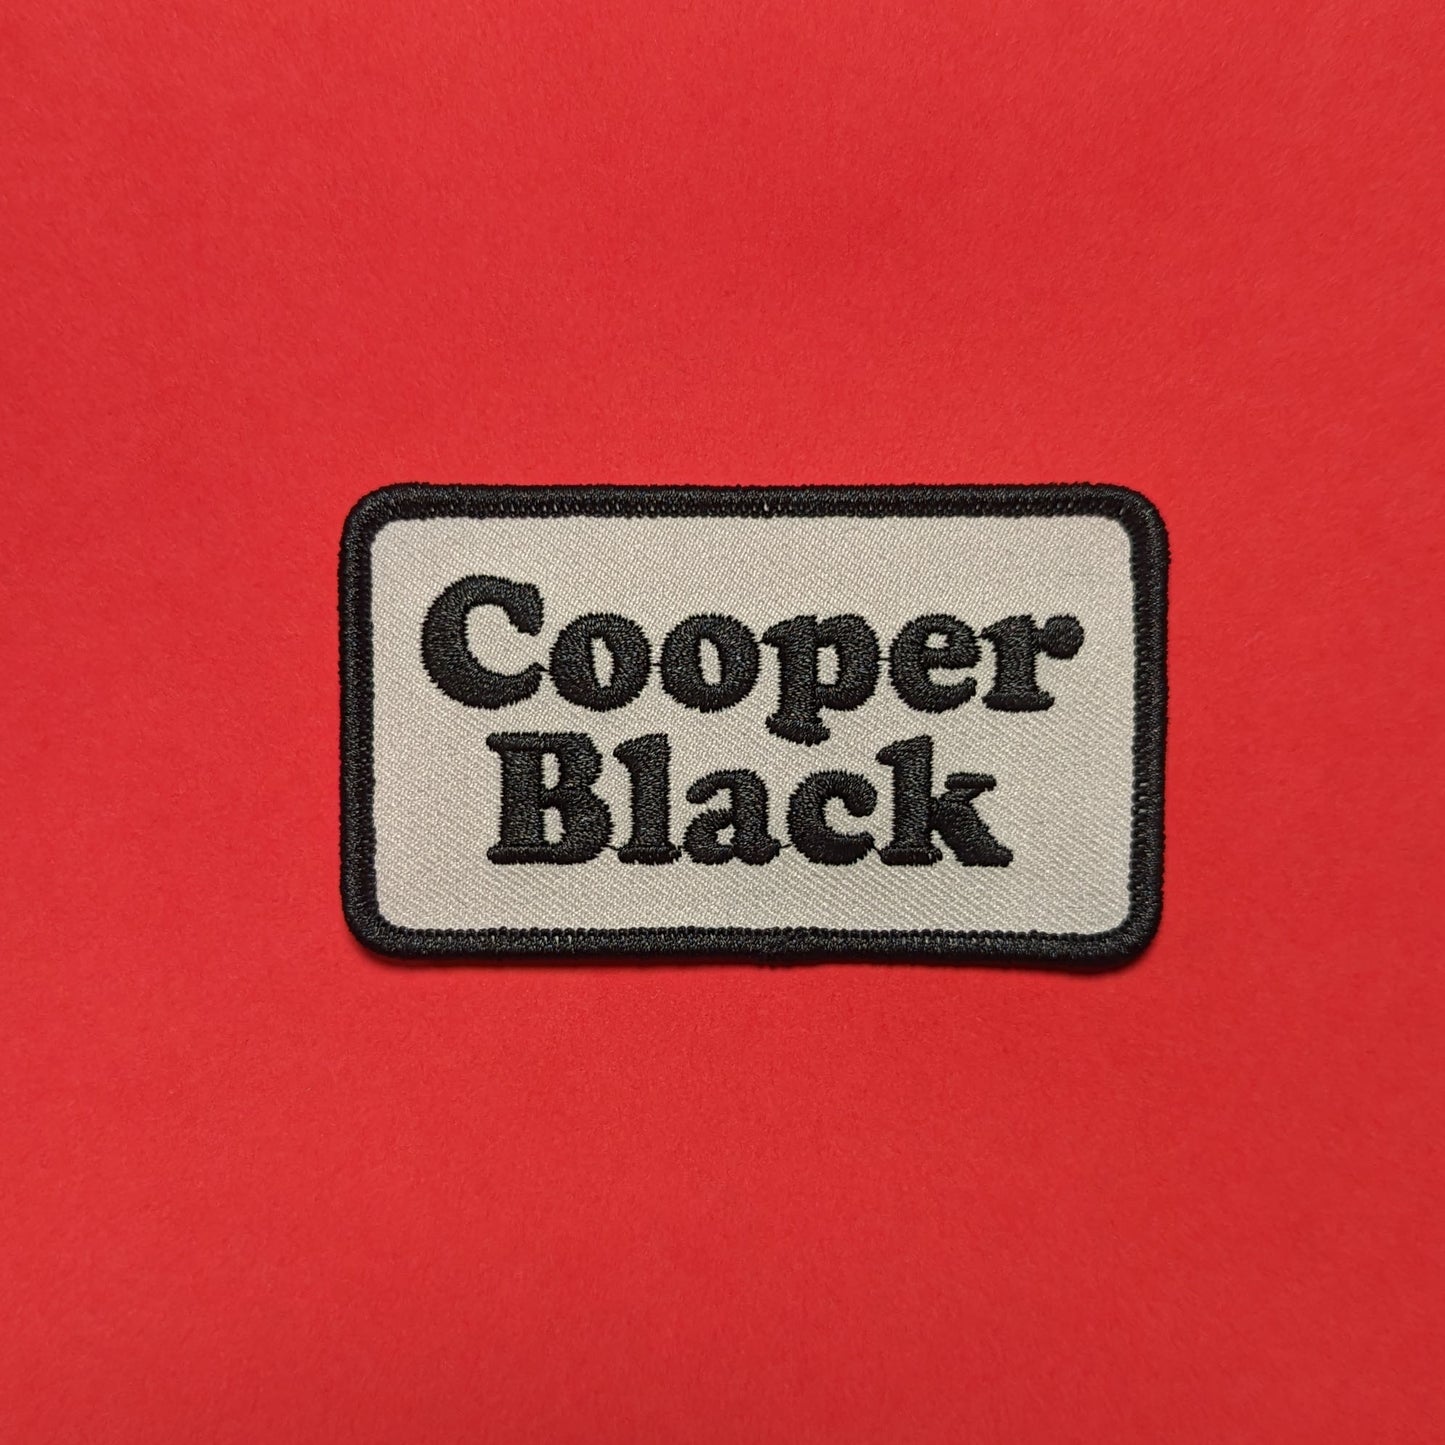 Cooper Black patch